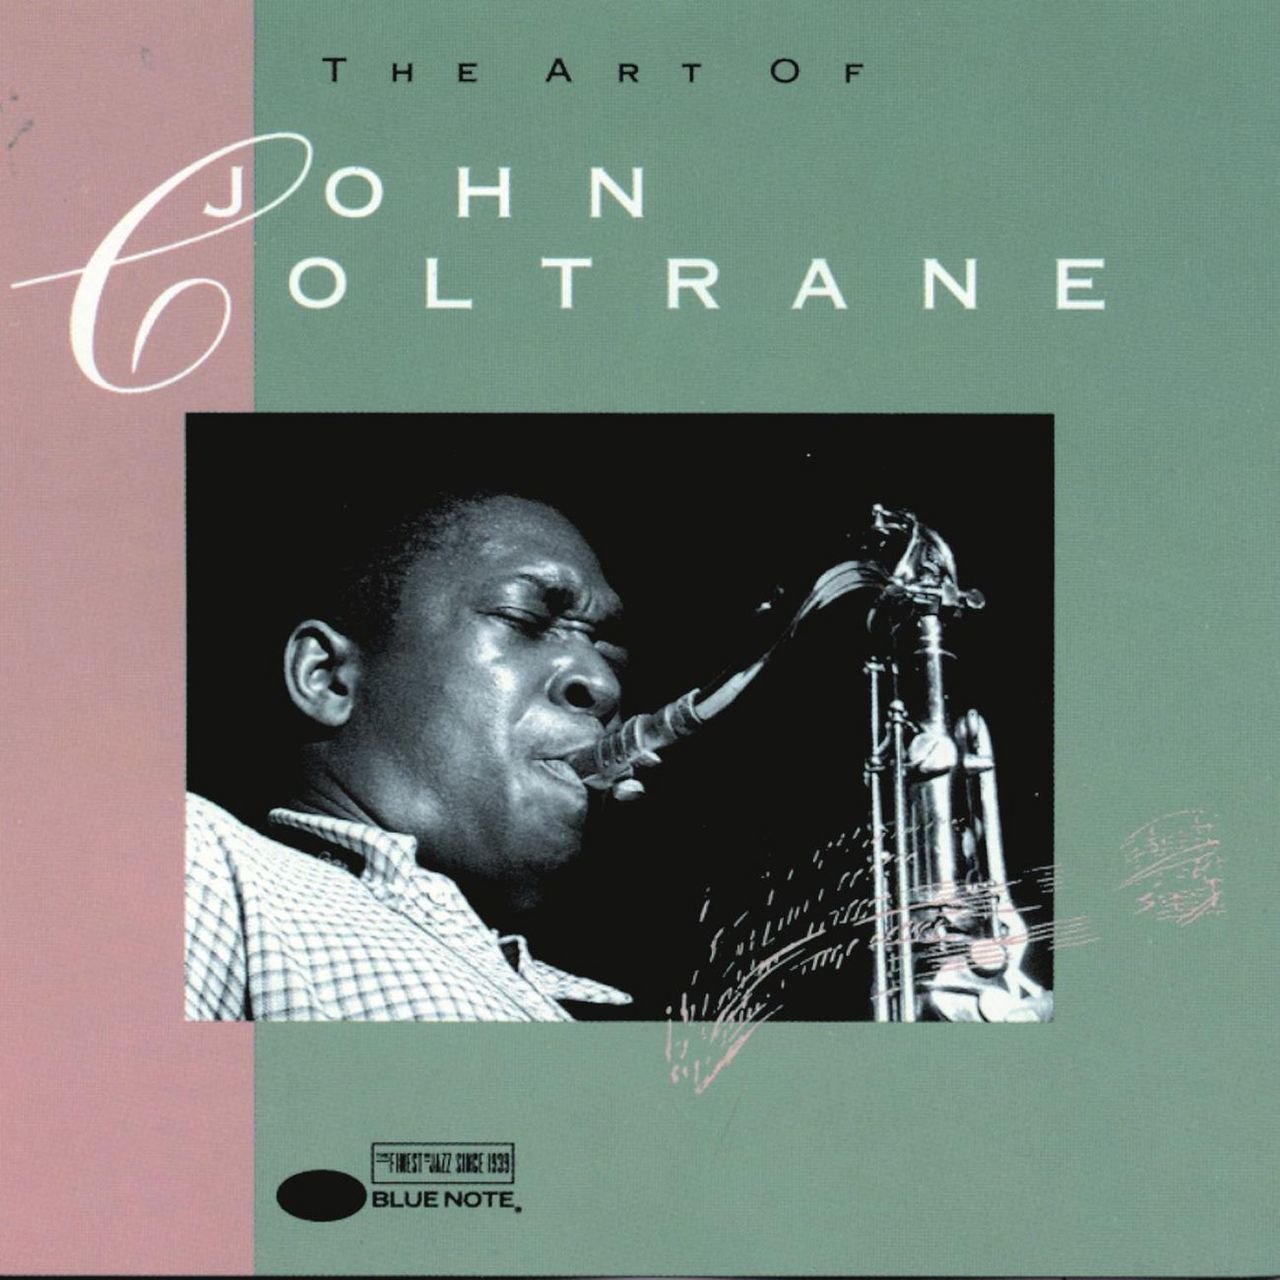 The Art Of Coltrane [1992]